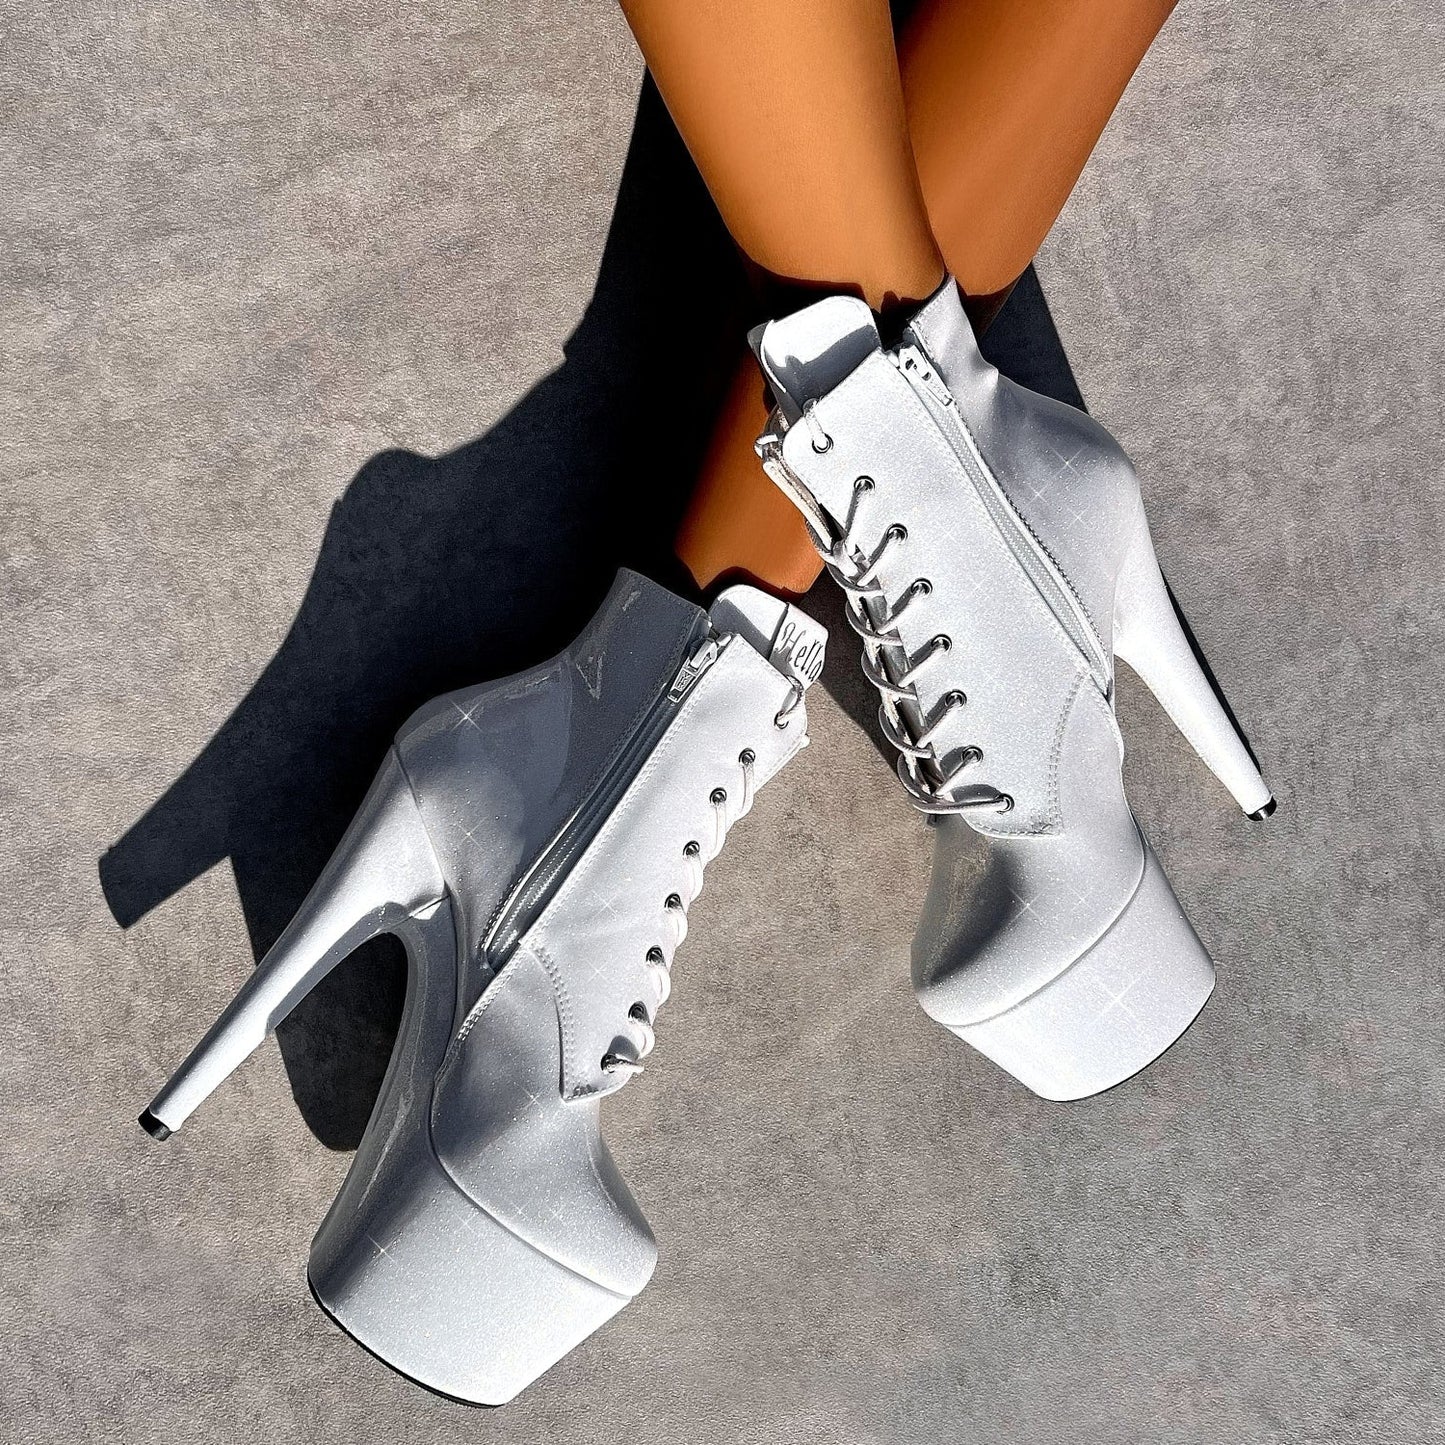 The Glitterati Ankle Boot - Snow Kween - 7 INCH, stripper shoe, stripper heel, pole heel, not a pleaser, platform, dancer, pole dance, floor work